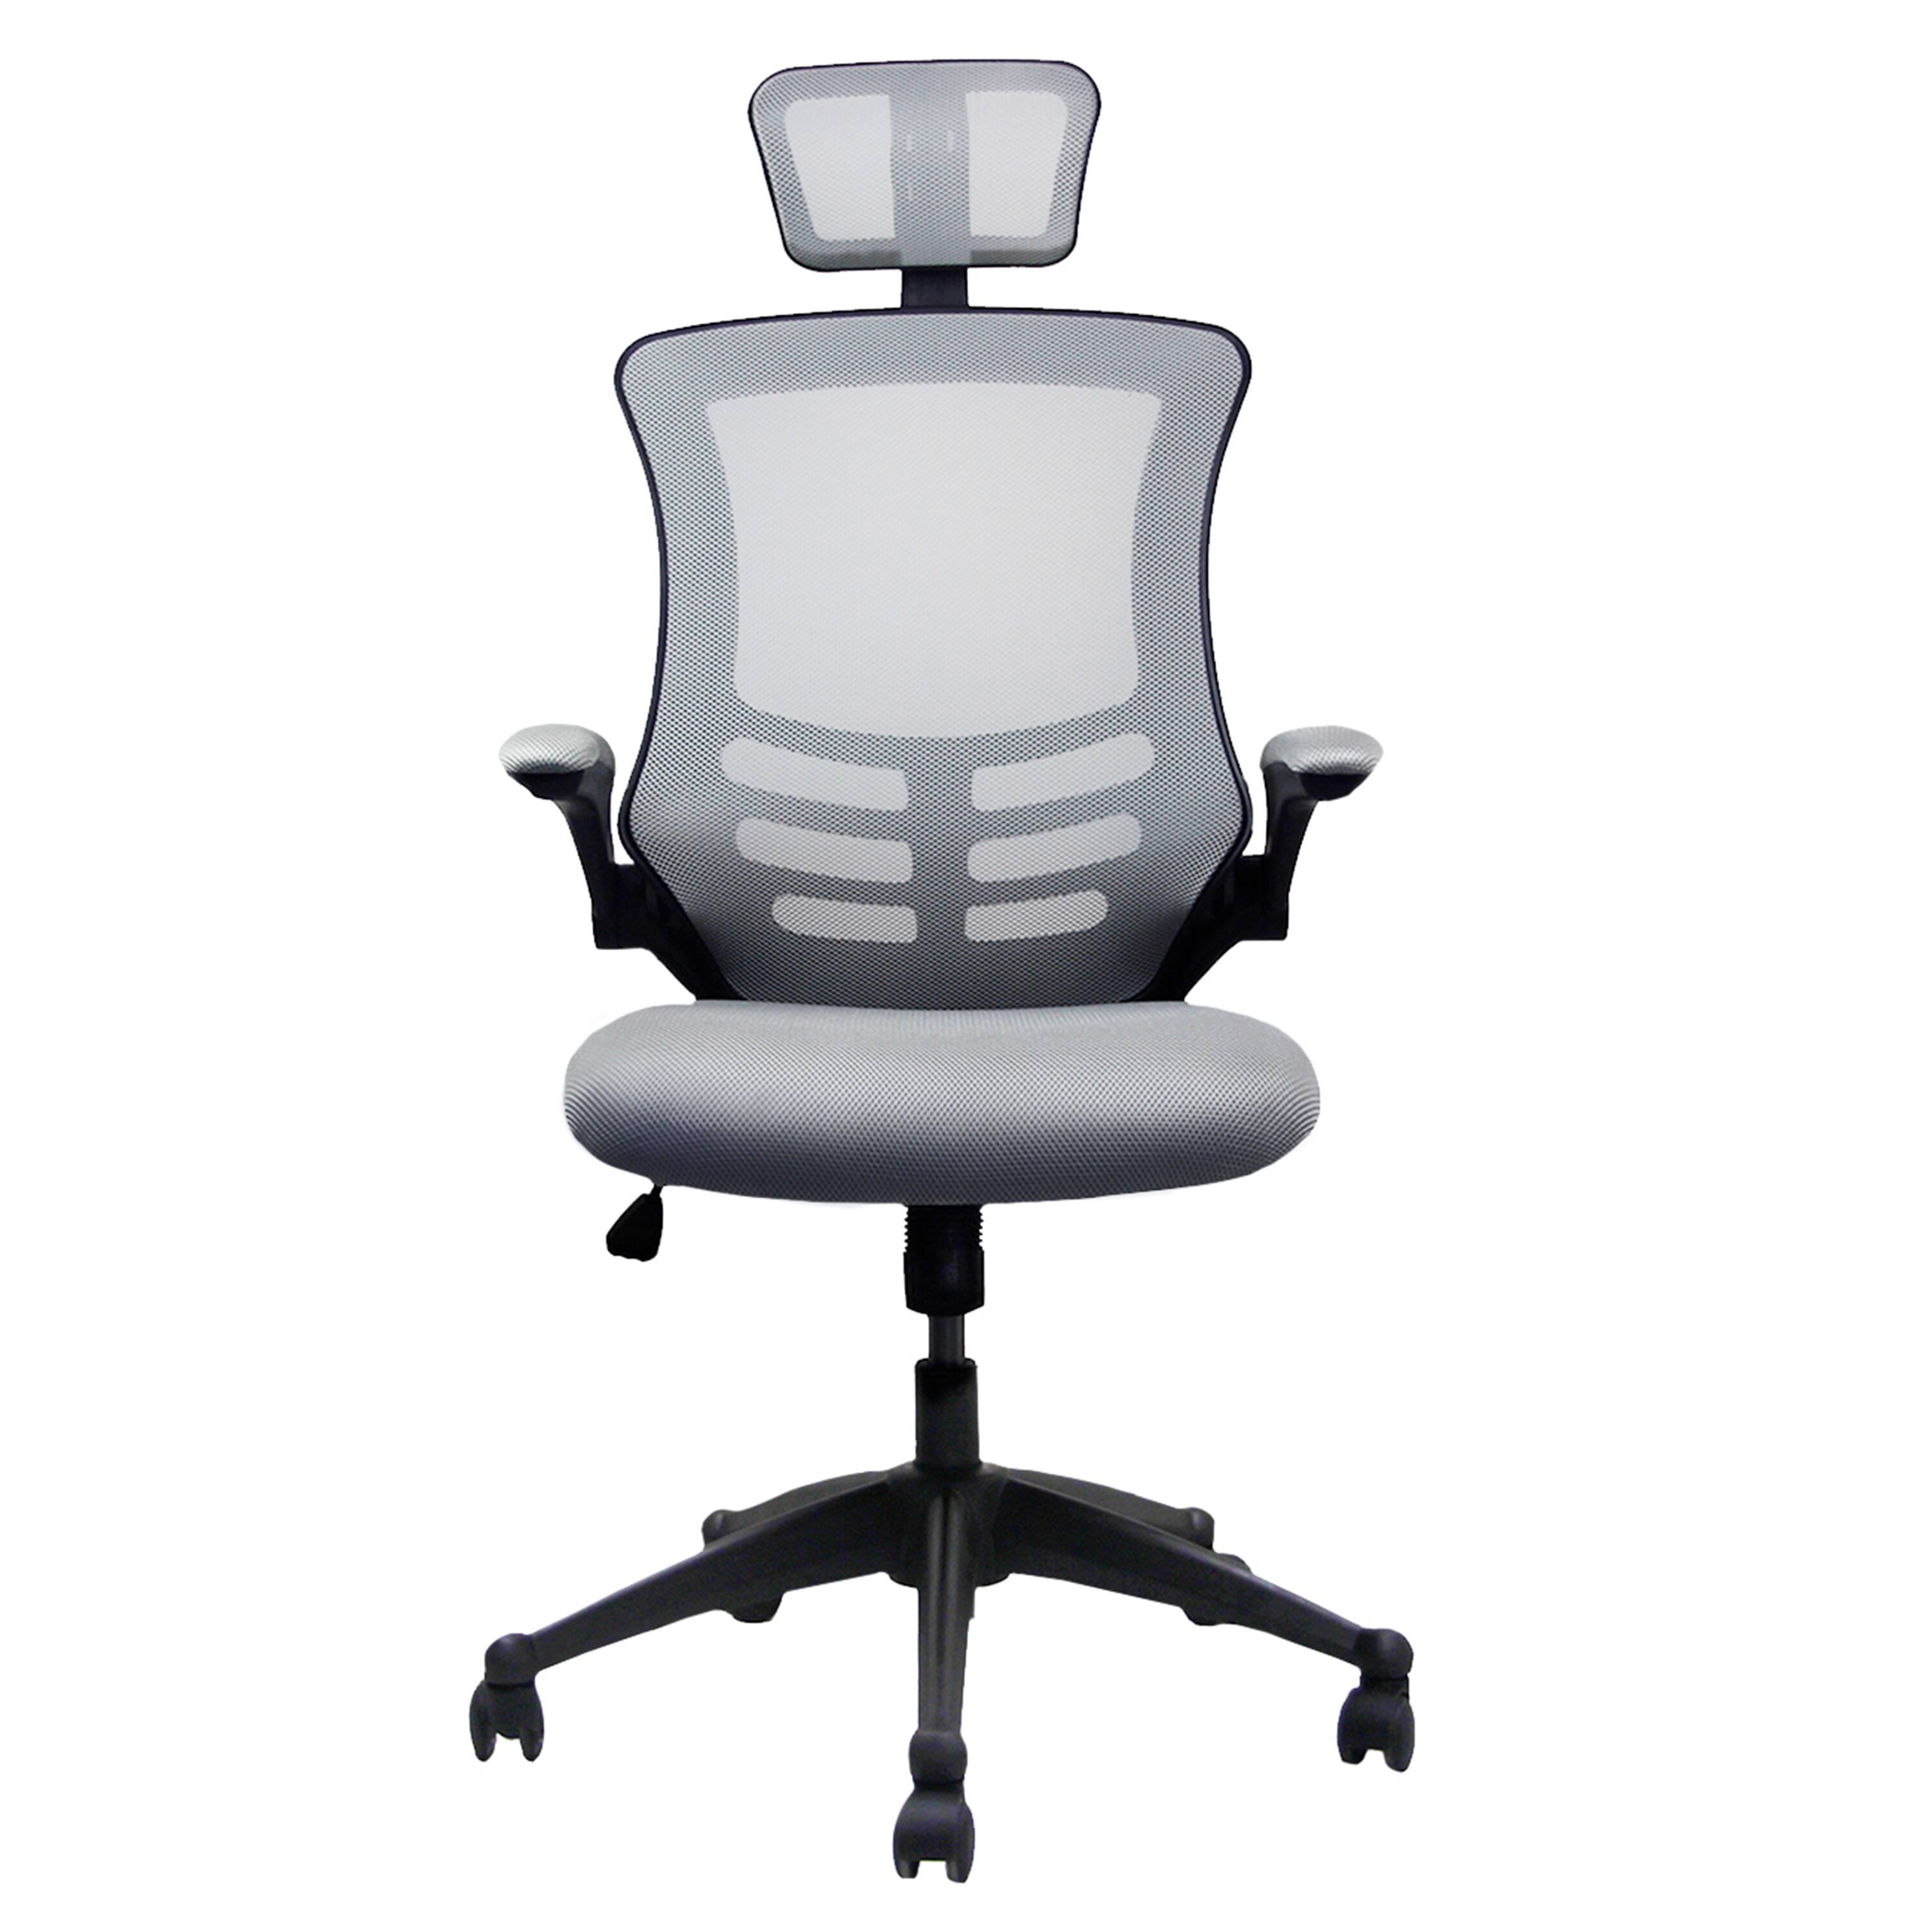 Ergonomic Mesh Computer Chair, High-Back Executive Office Chair,Silver ...